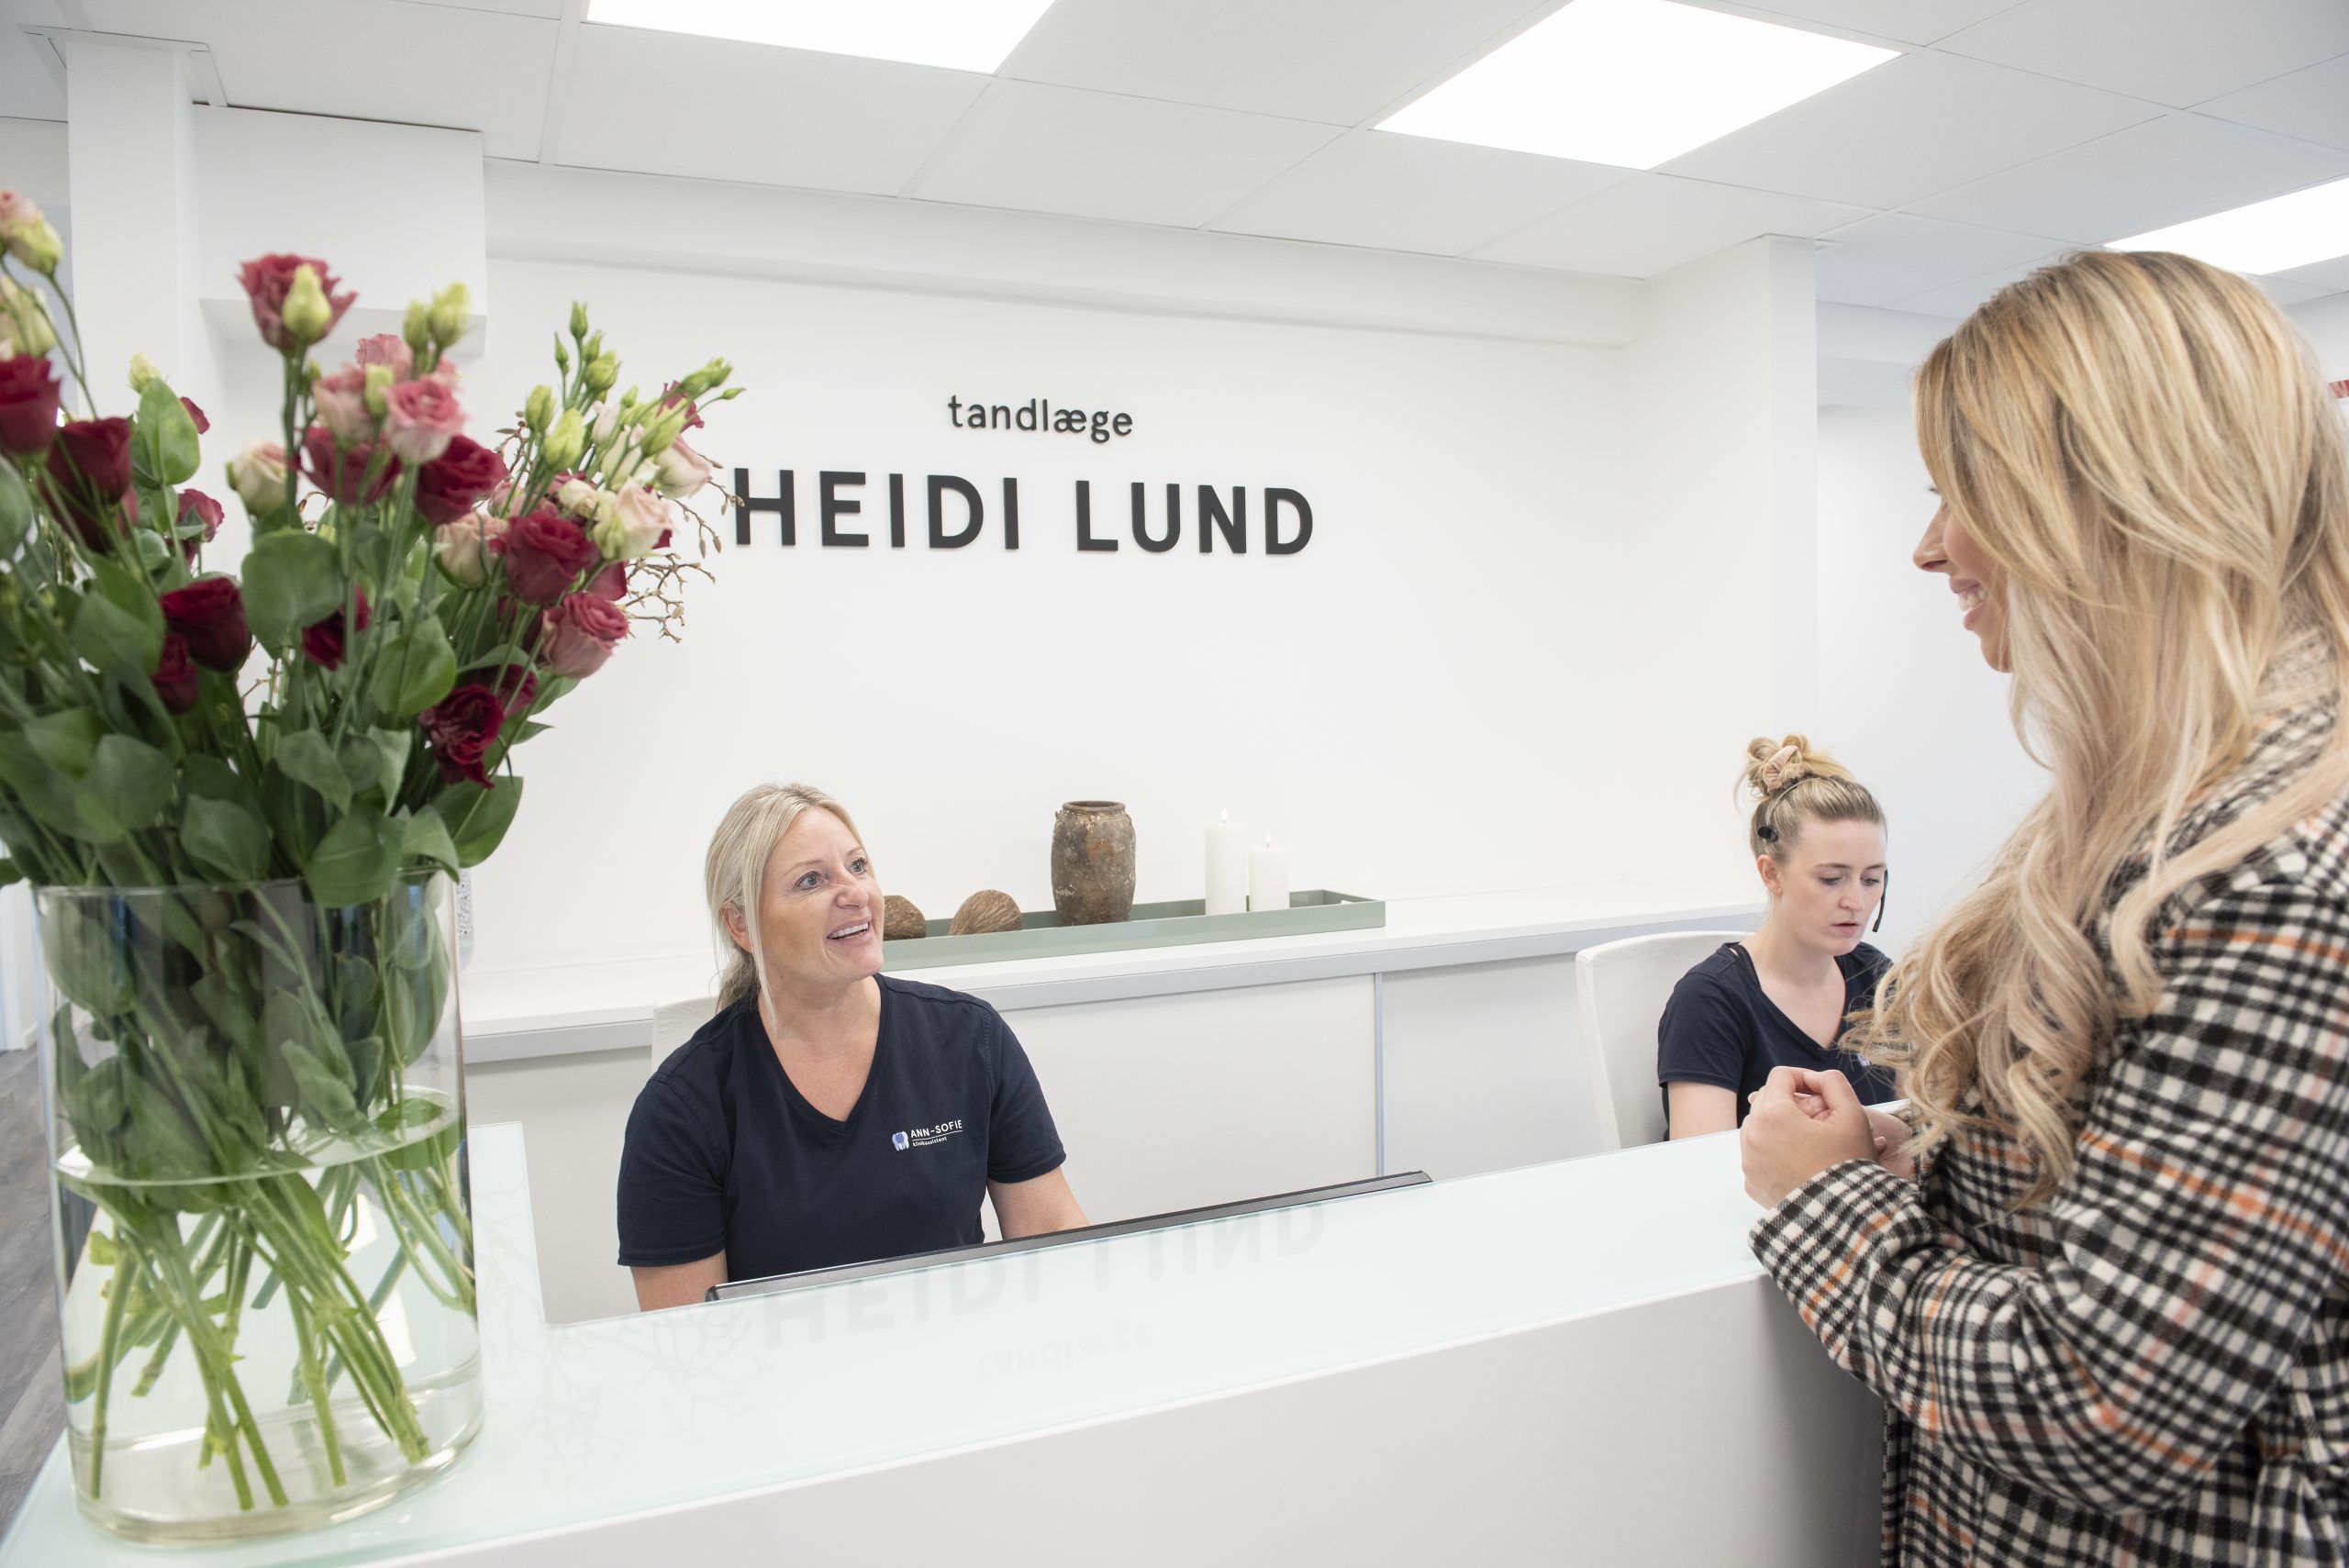 Hos Tandlæge Heidi Lund kan du få det perfekte smil med Invisalign-alignere